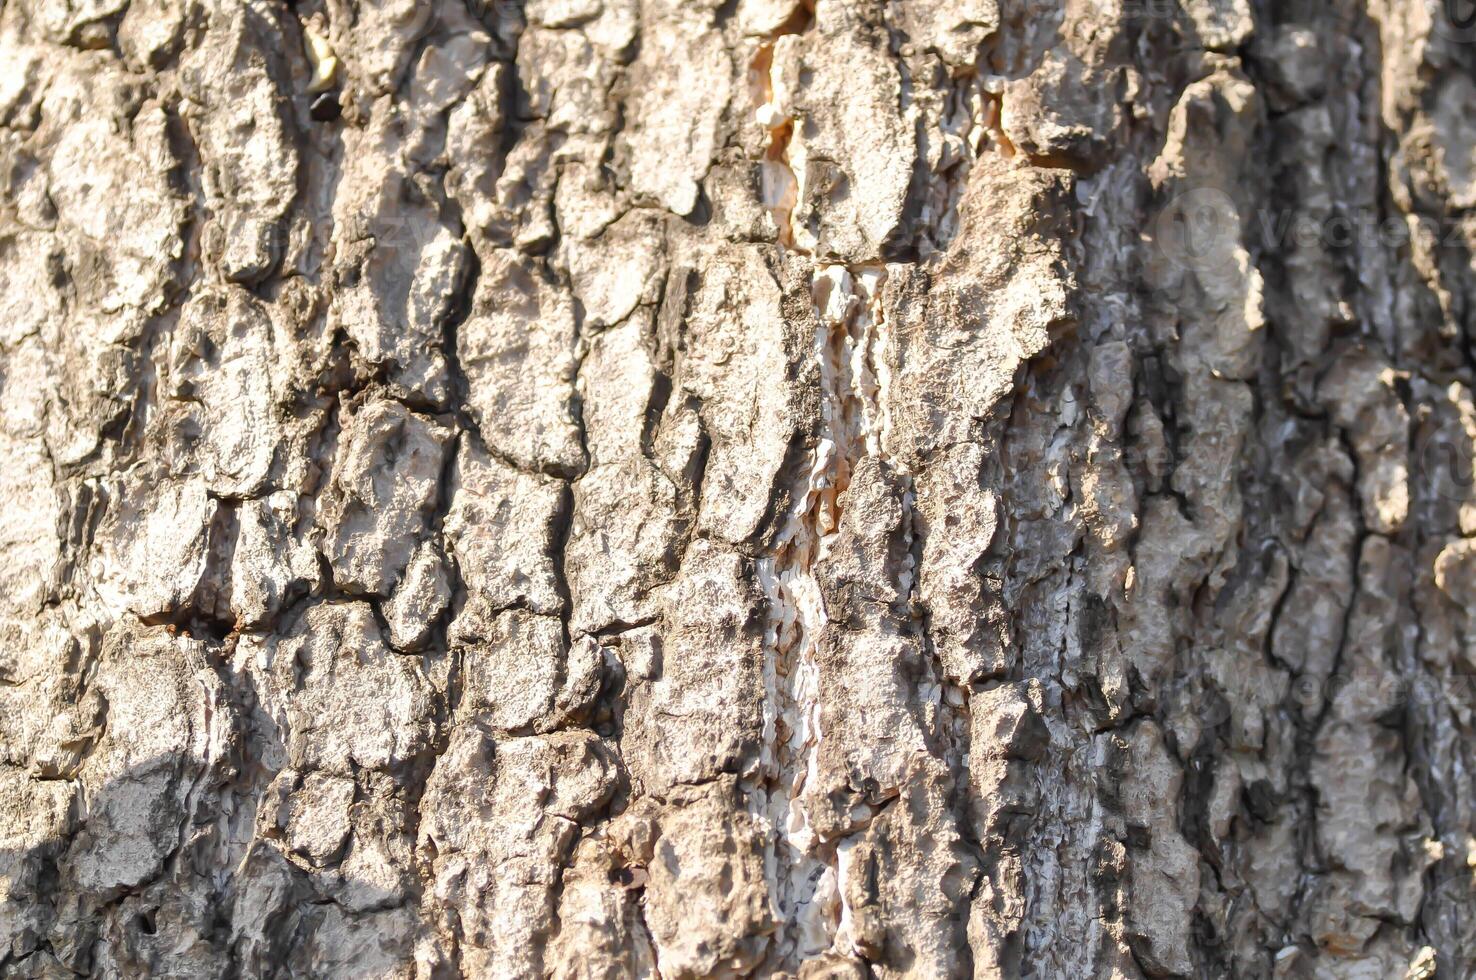 árvore latido ou latido , Alstonia estudioso ou apocynaceae ou diabo árvore ou branco madeira de queijo ou diabo latido ou Preto borda árvore foto